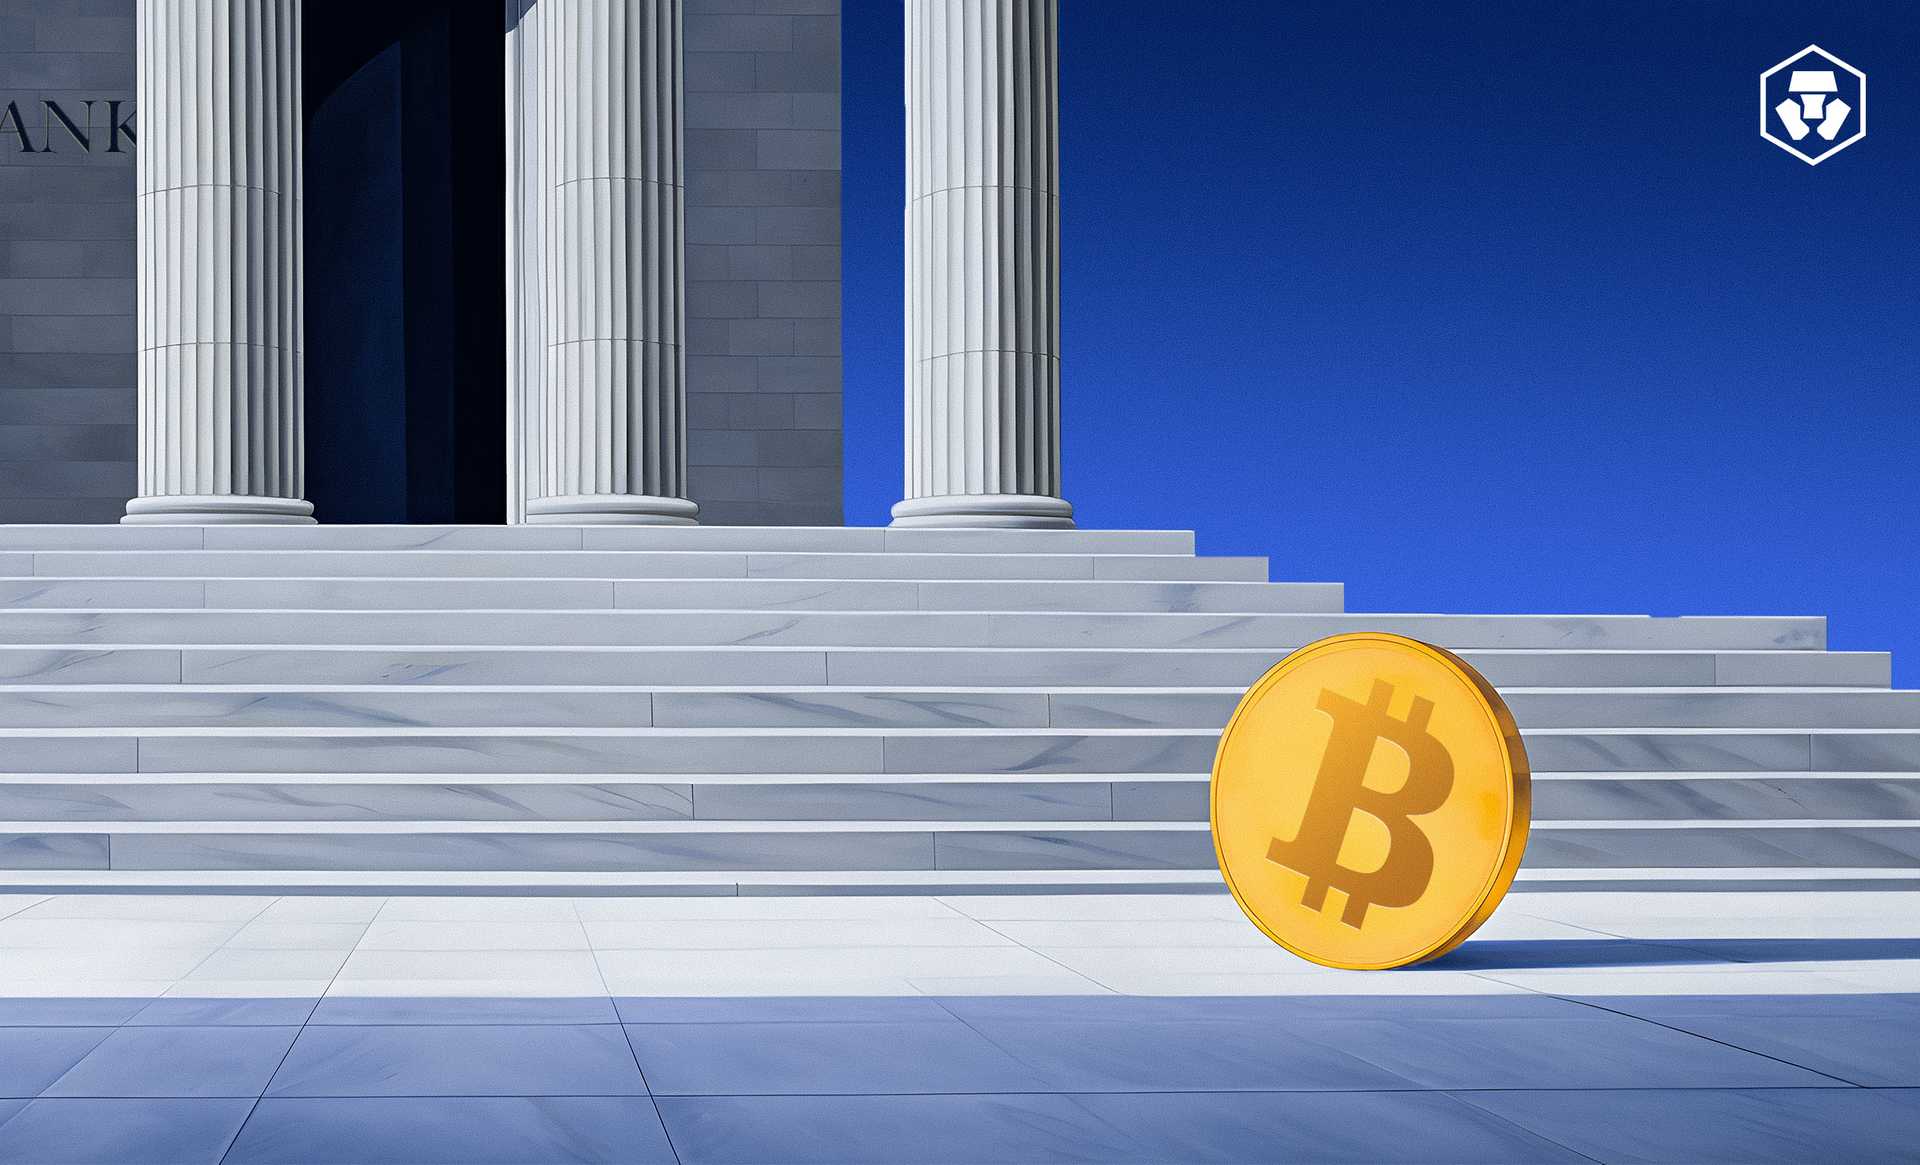 Why Was Bitcoin Created?